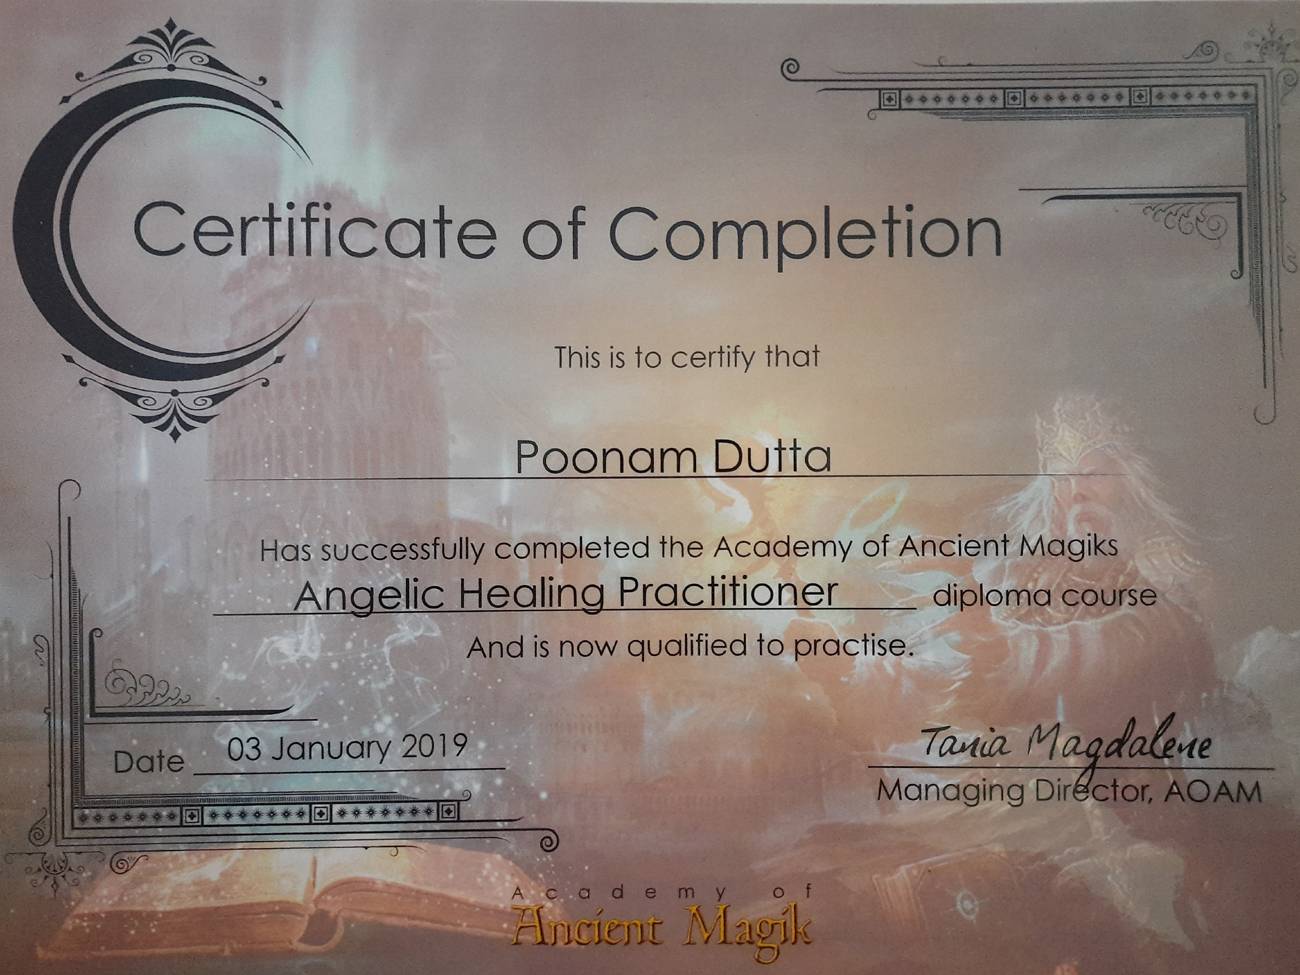 Poonam Dutta angelic healing practitioner